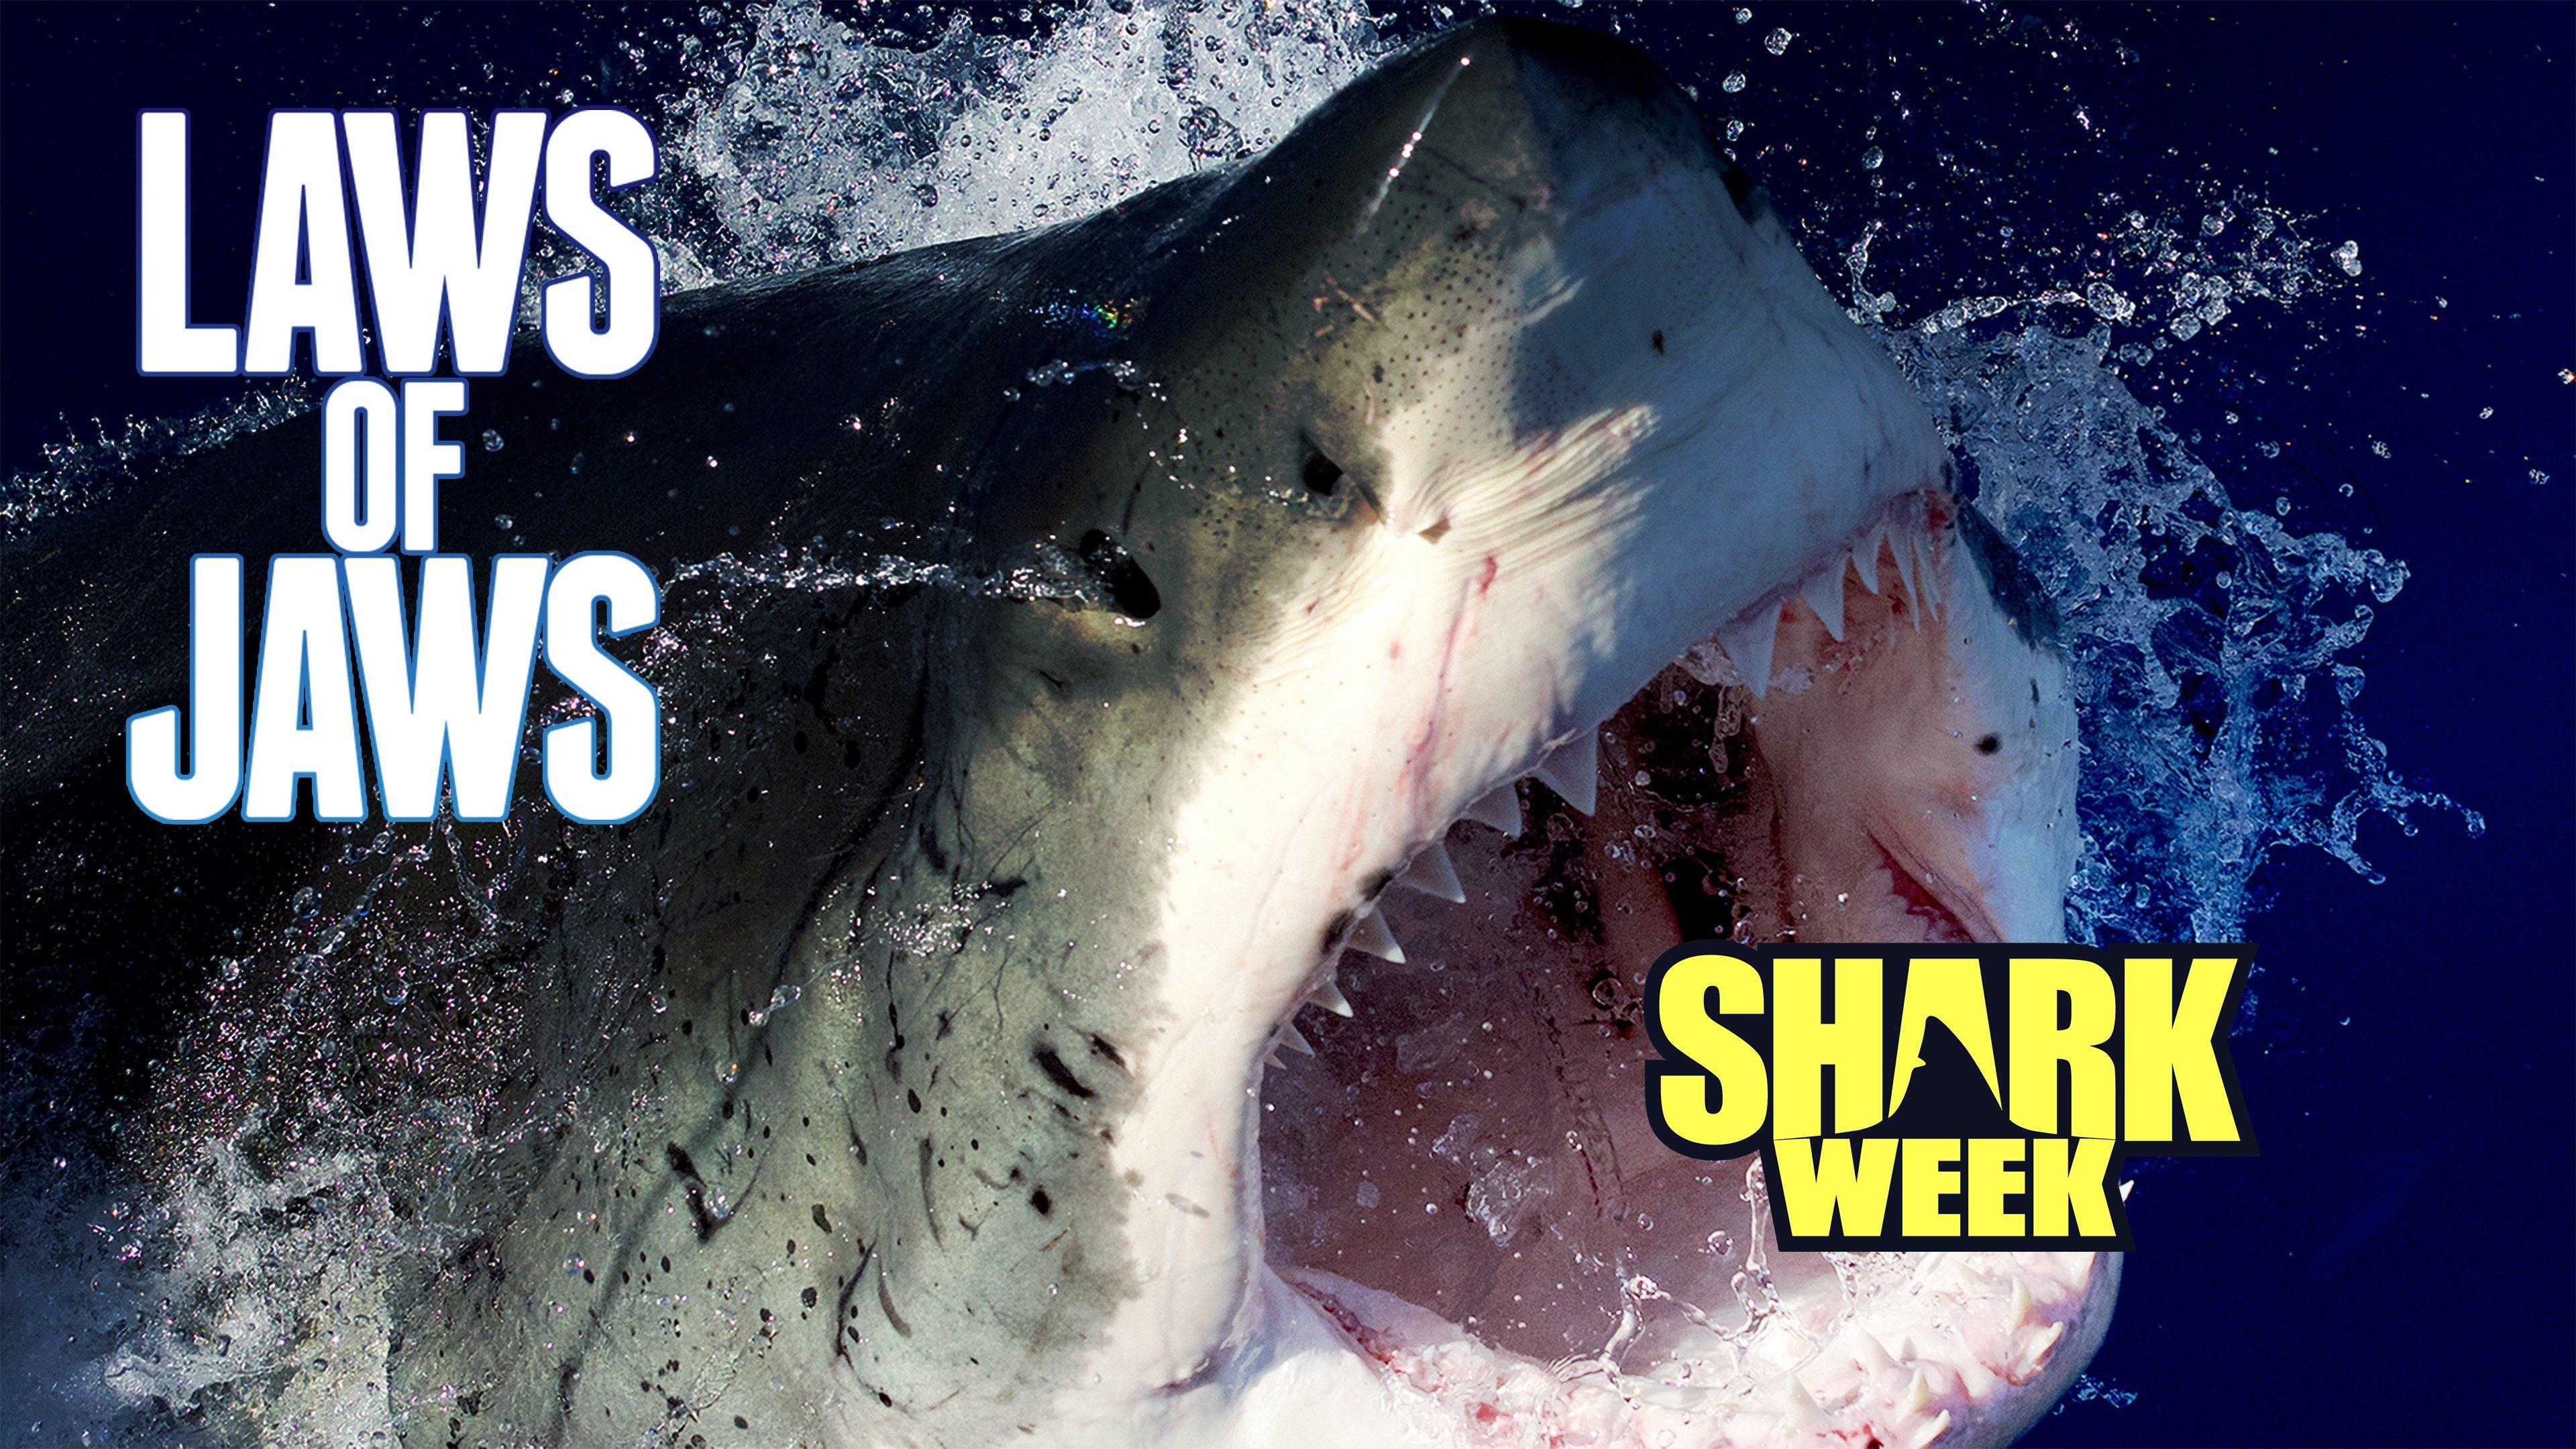 Неделя акул. Shark week 2012. Шоу маска песня акулы